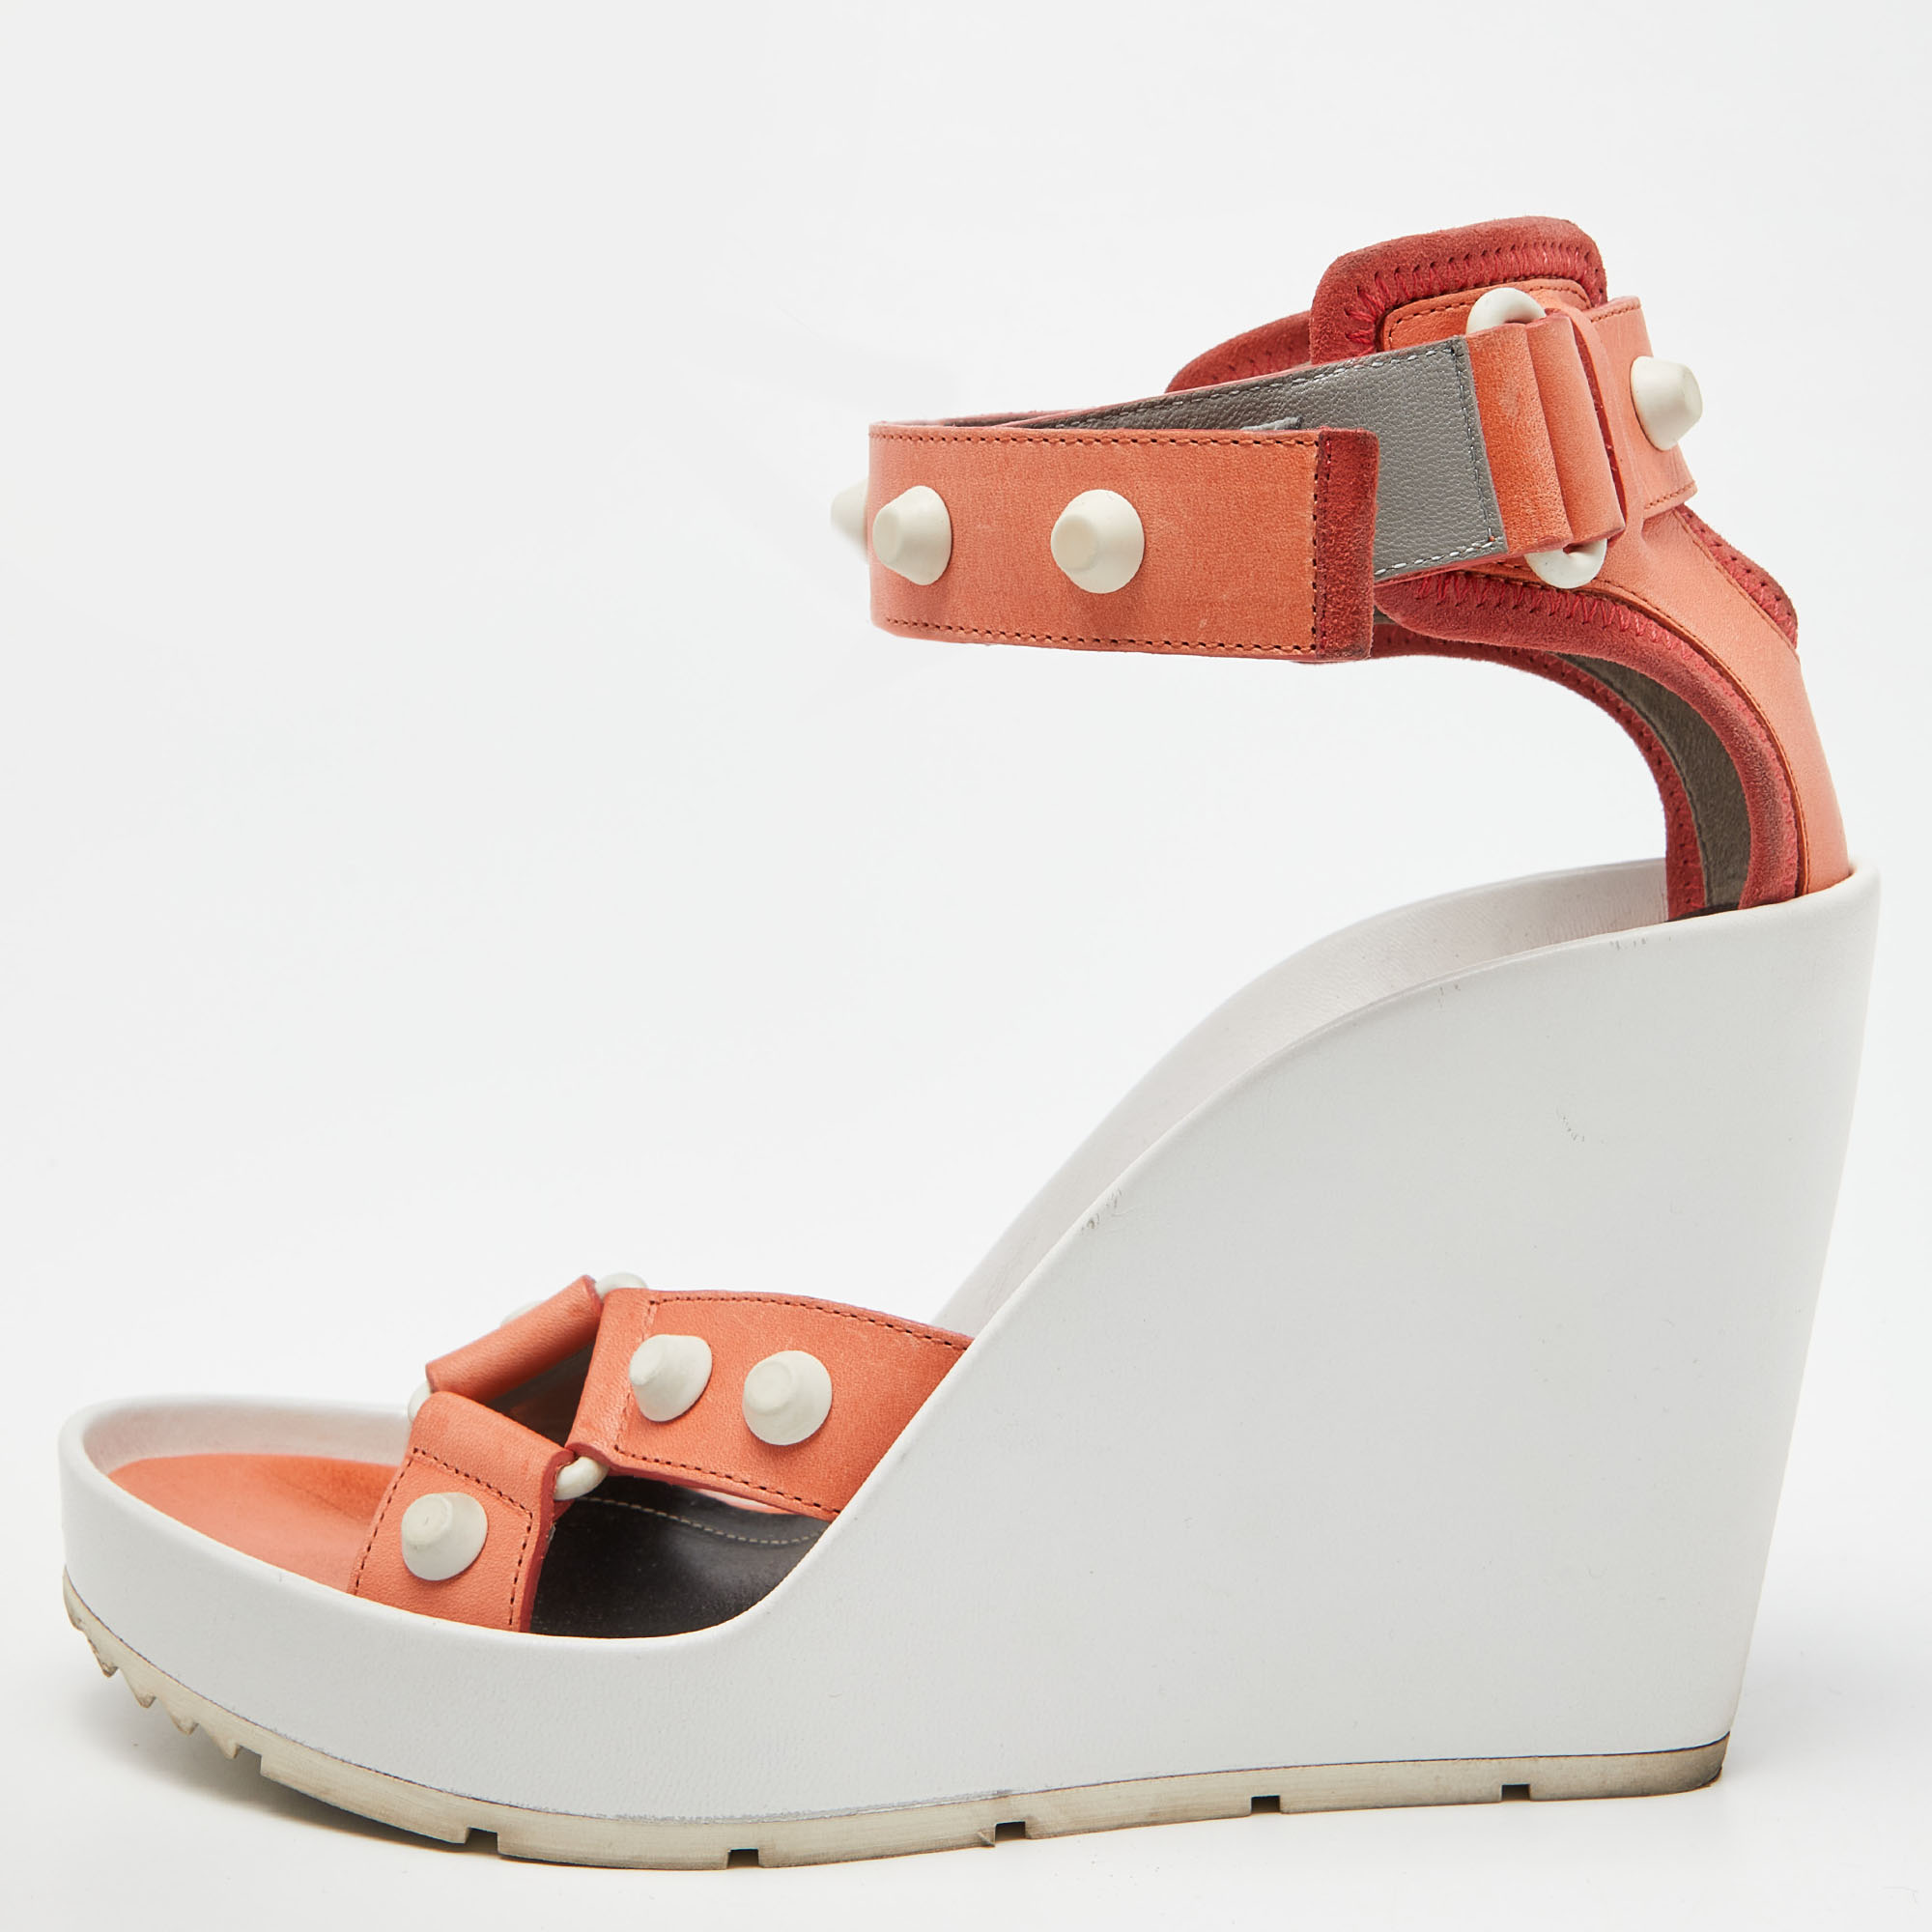 Balenciaga orange/white leather studded wedge ankle cuff sandals size 37